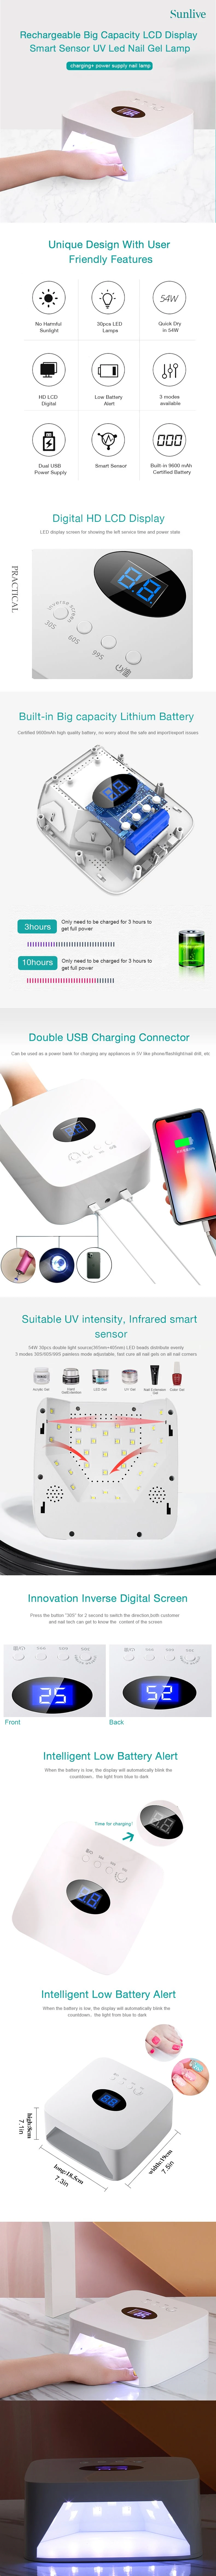 Professional Portable Manicure Kit Gel Nail Polish UV LED Nail Dryer Machine